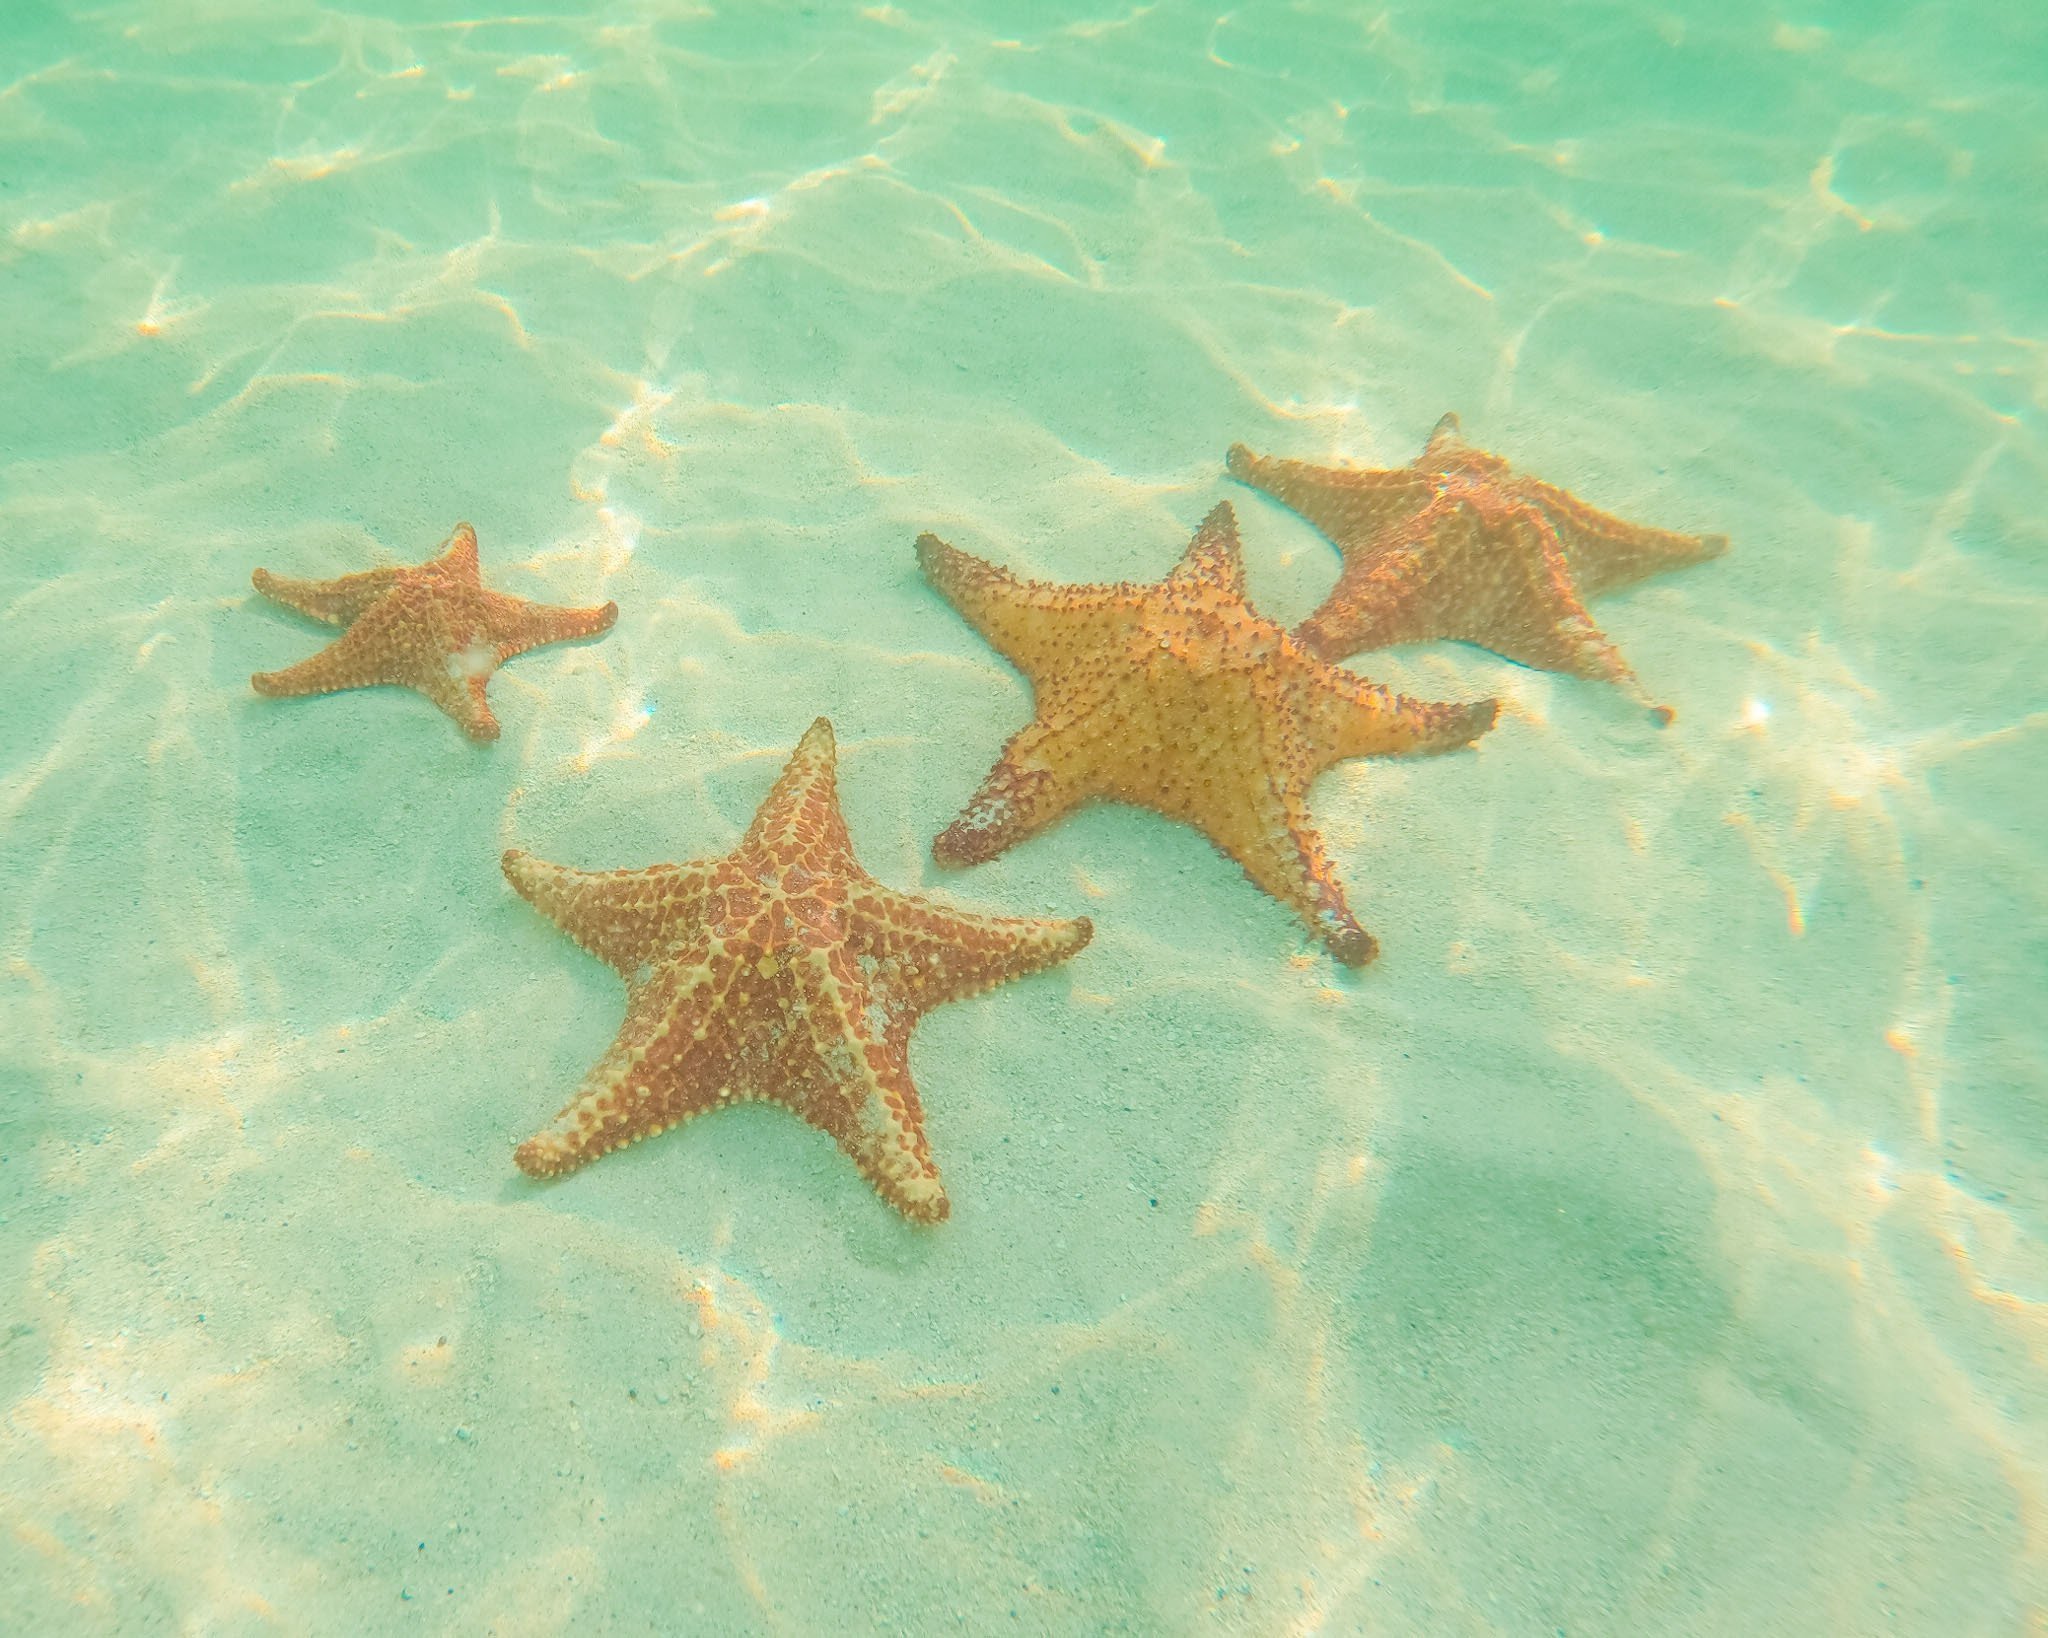 Star fish point, Cayman Islands